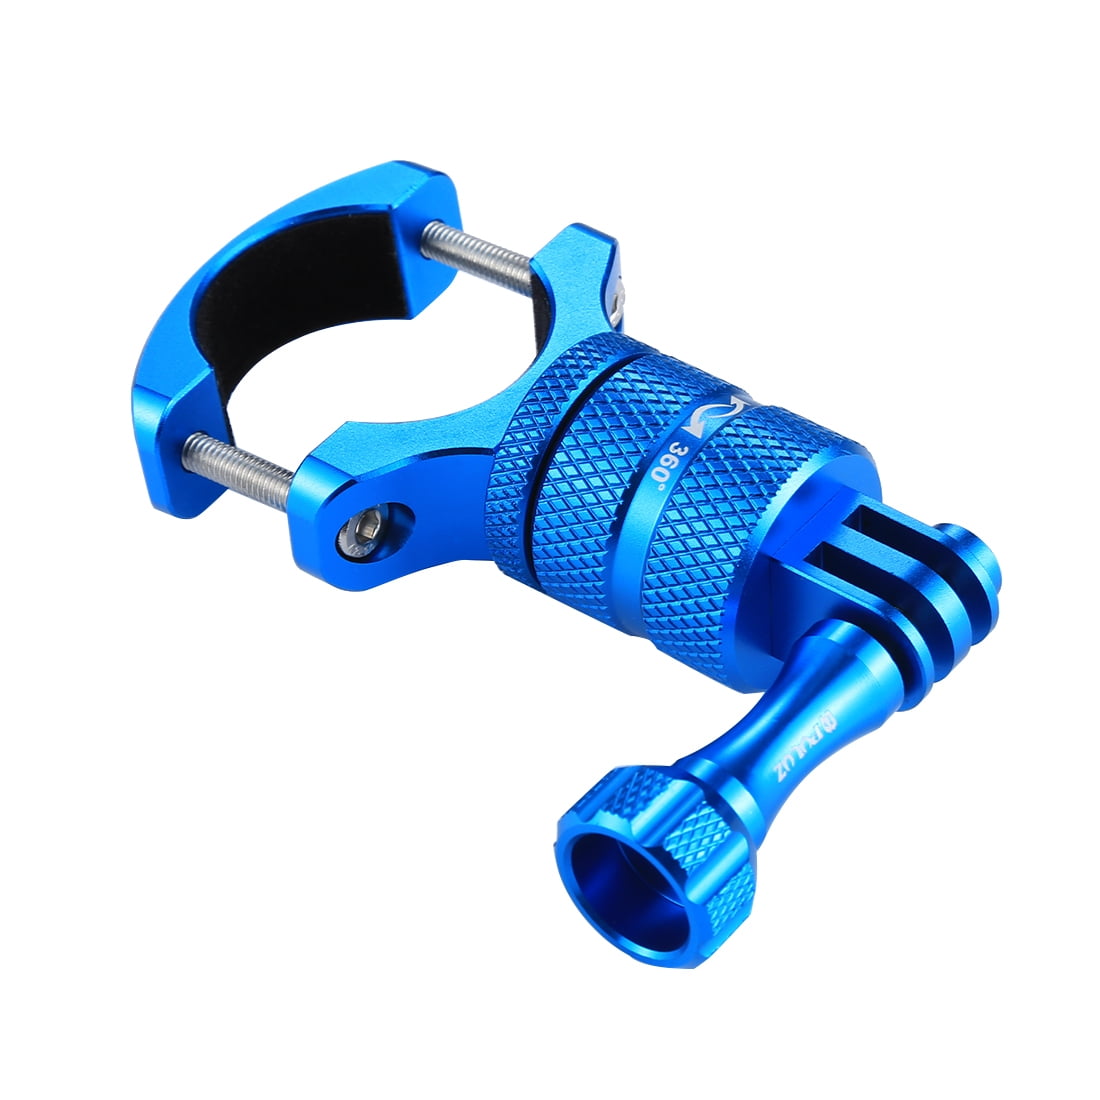 Biplut Three way 360 Degree Adjustable Aluminium alloy Pivot Arm Mount  Adapter for Sport Camera (Blue) 